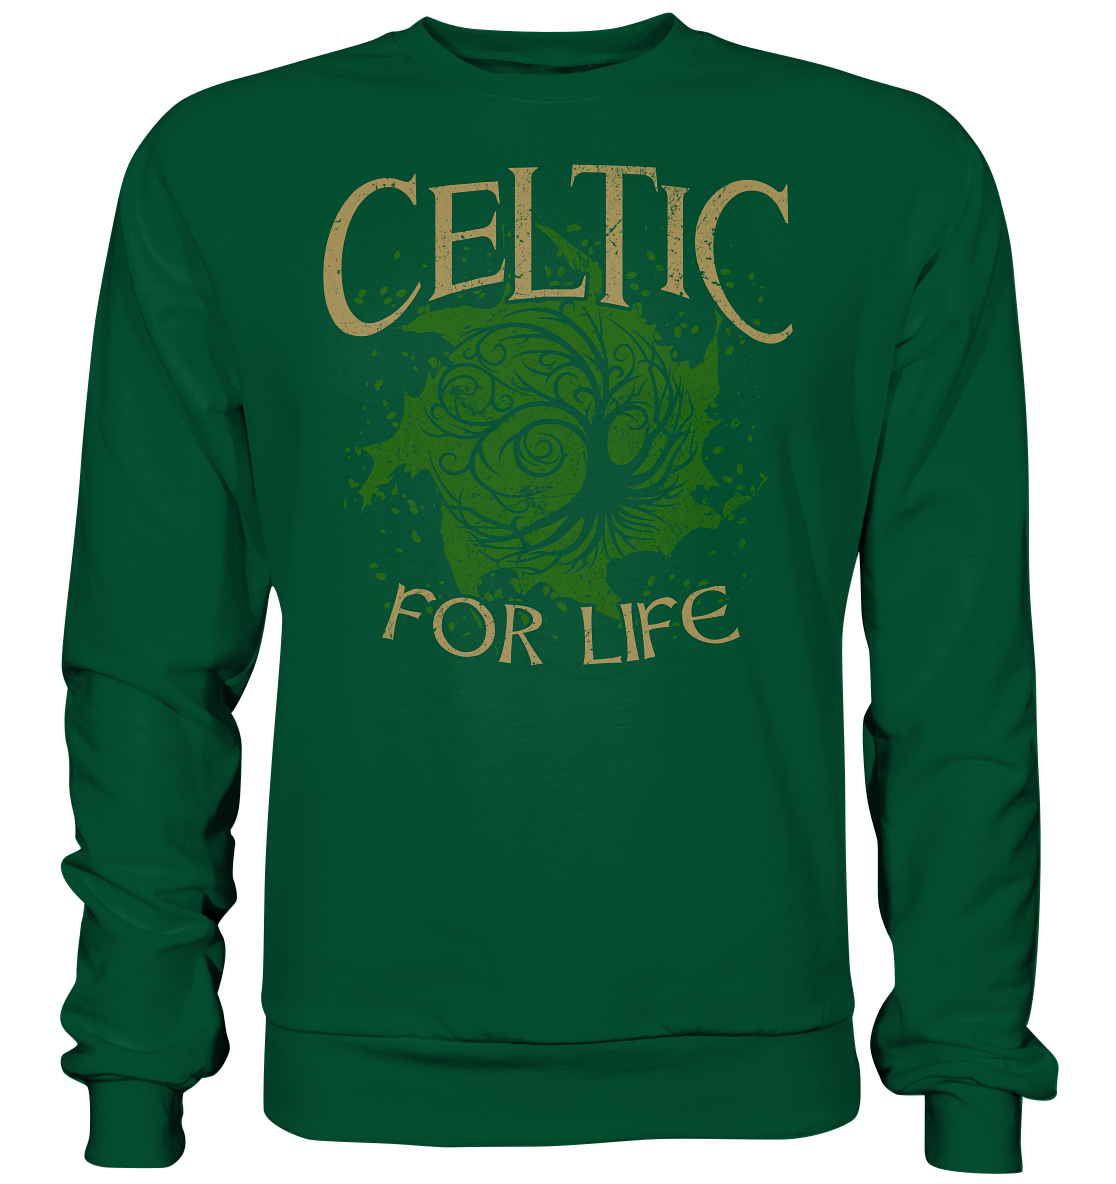 Celtic "For Life" - Basic Sweatshirt